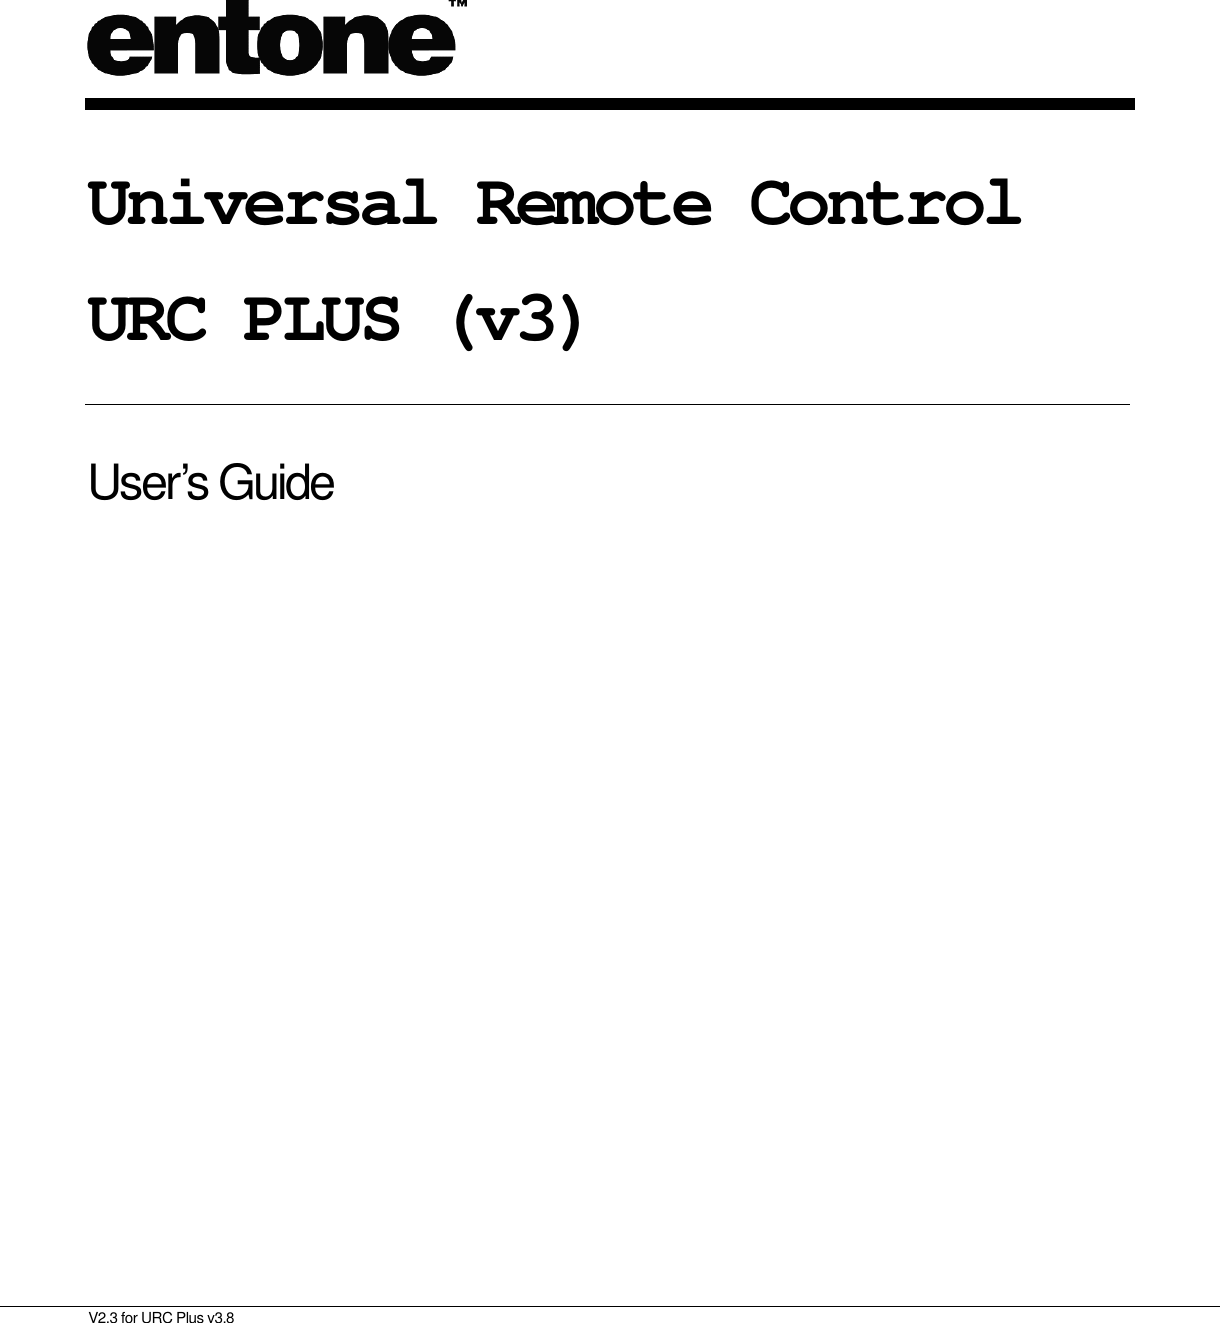                                V2.3 for URC Plus v3.8 Universal Remote ControlURC PLUS (v3)User’s Guide  